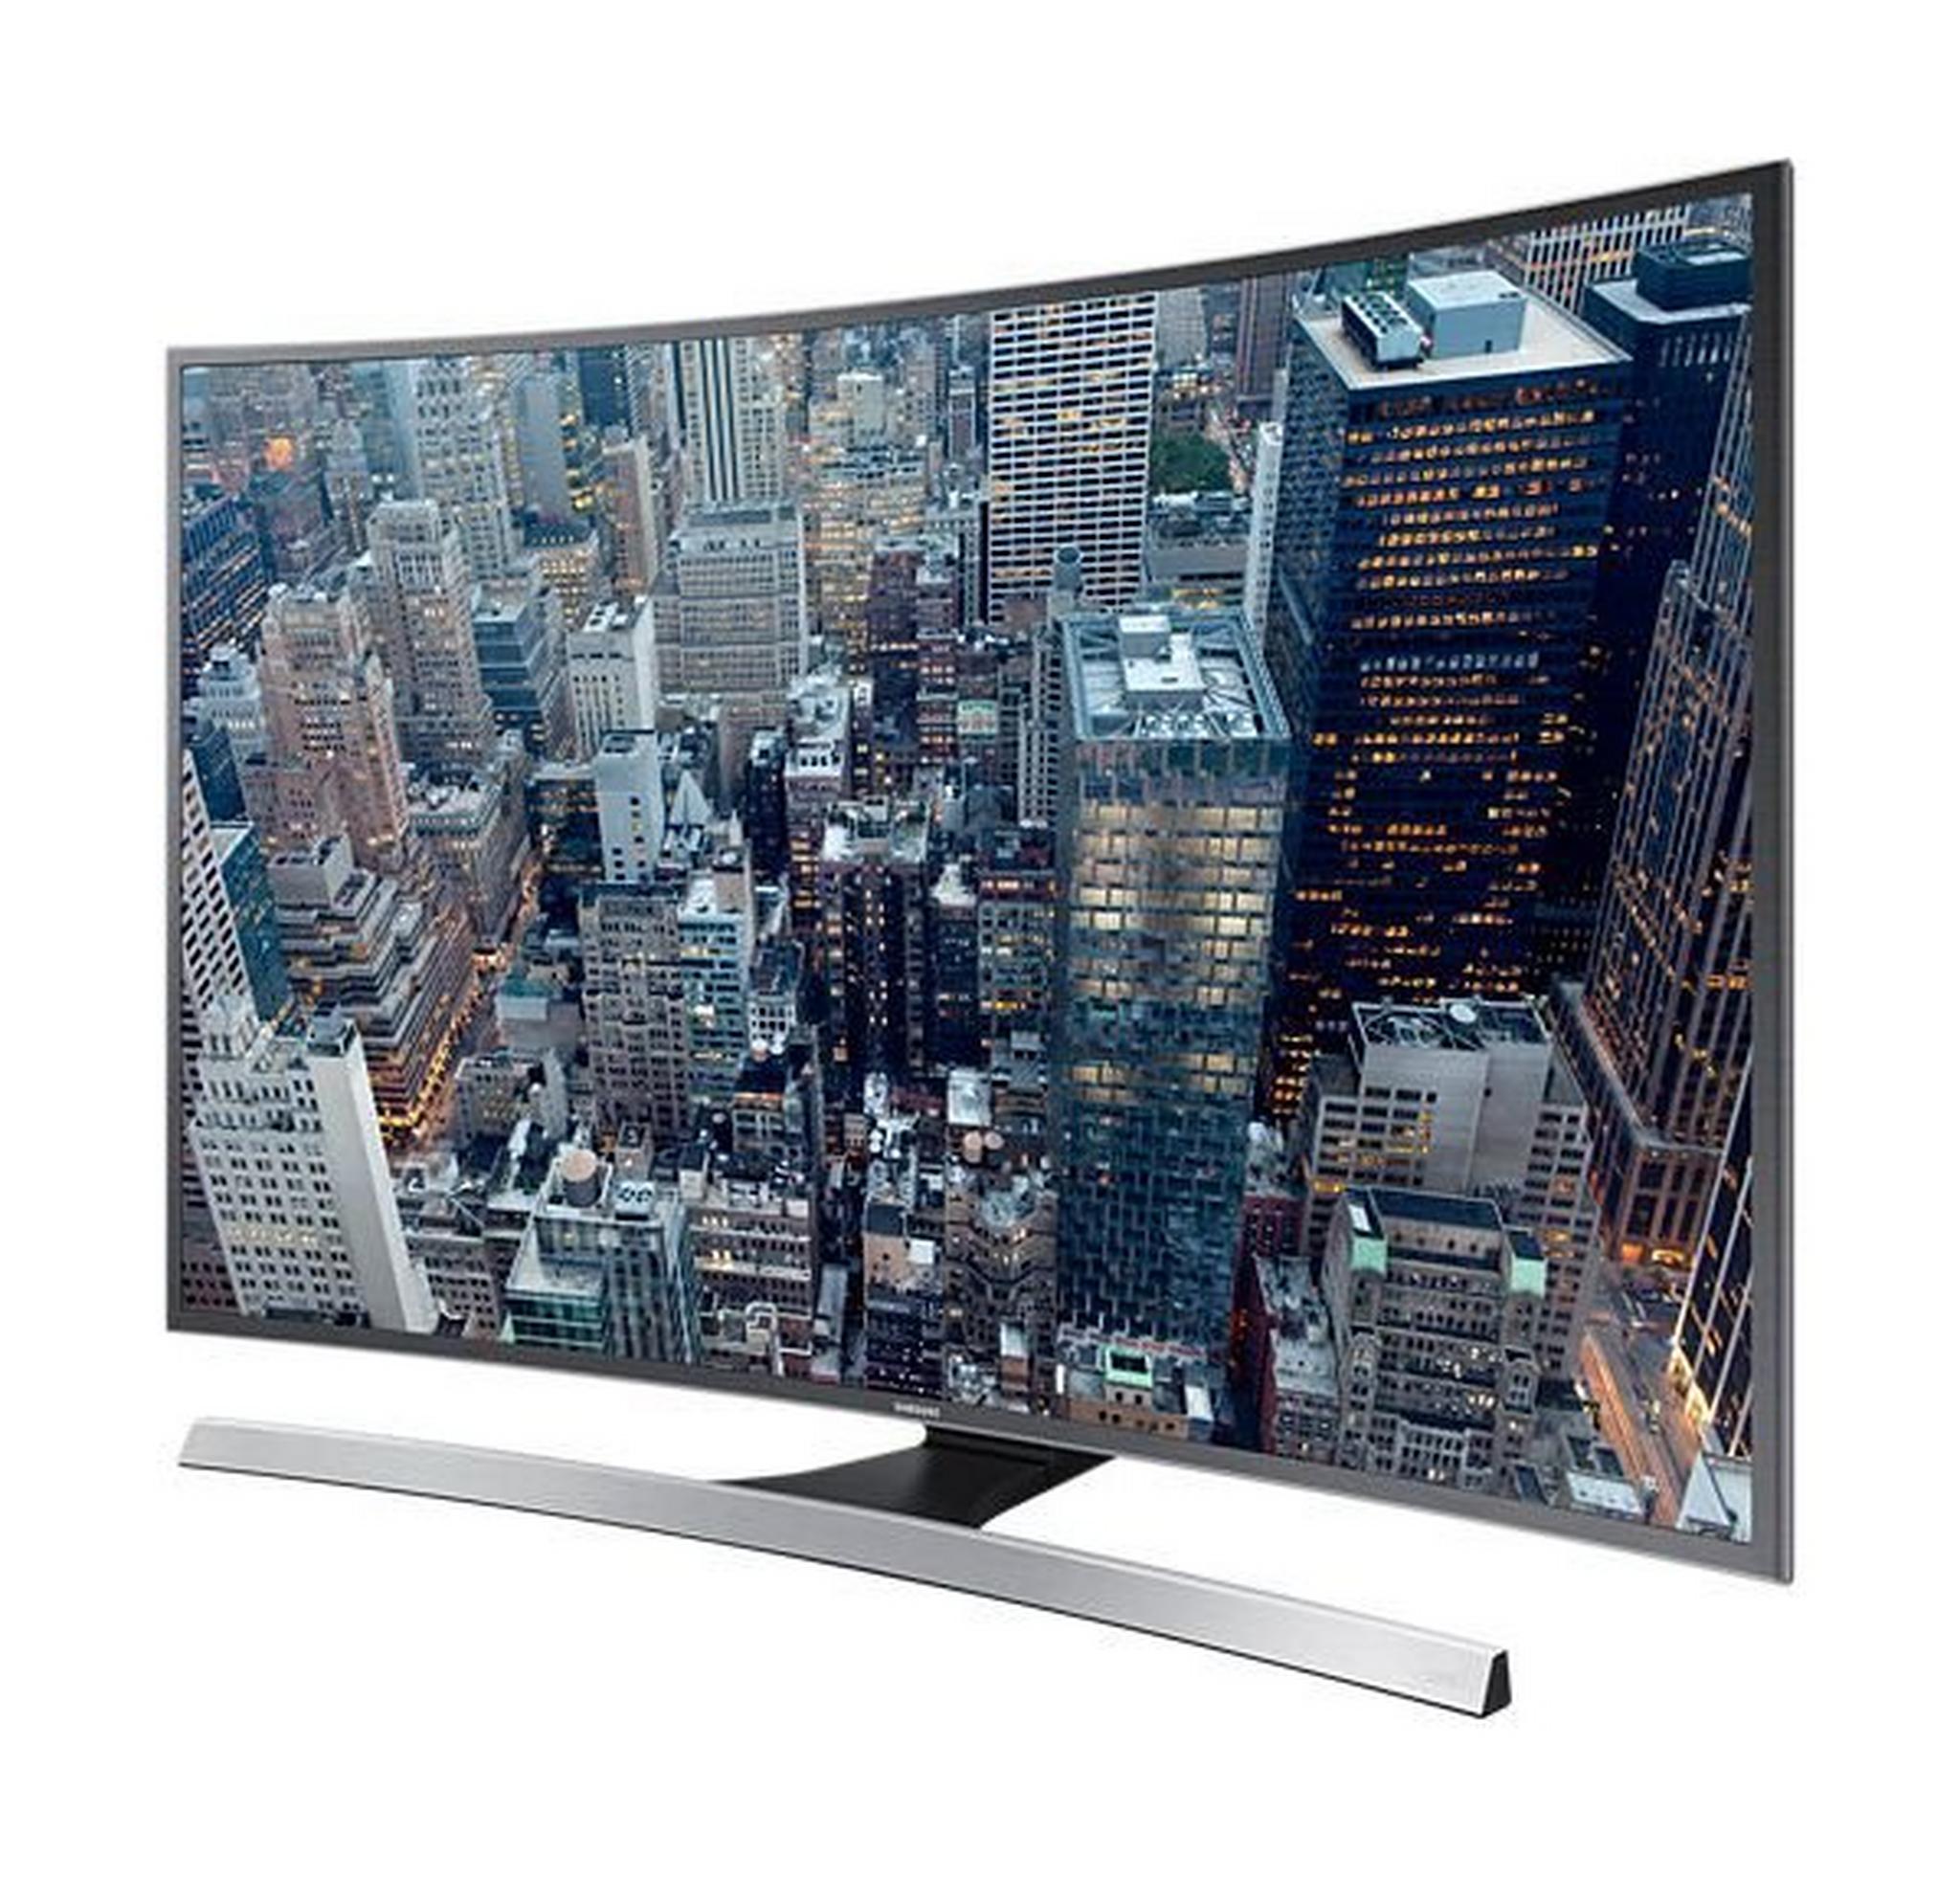 Samsung 48-Inch Curved Ultra HD (2160p) Smart LED TV - UA48JU6600R